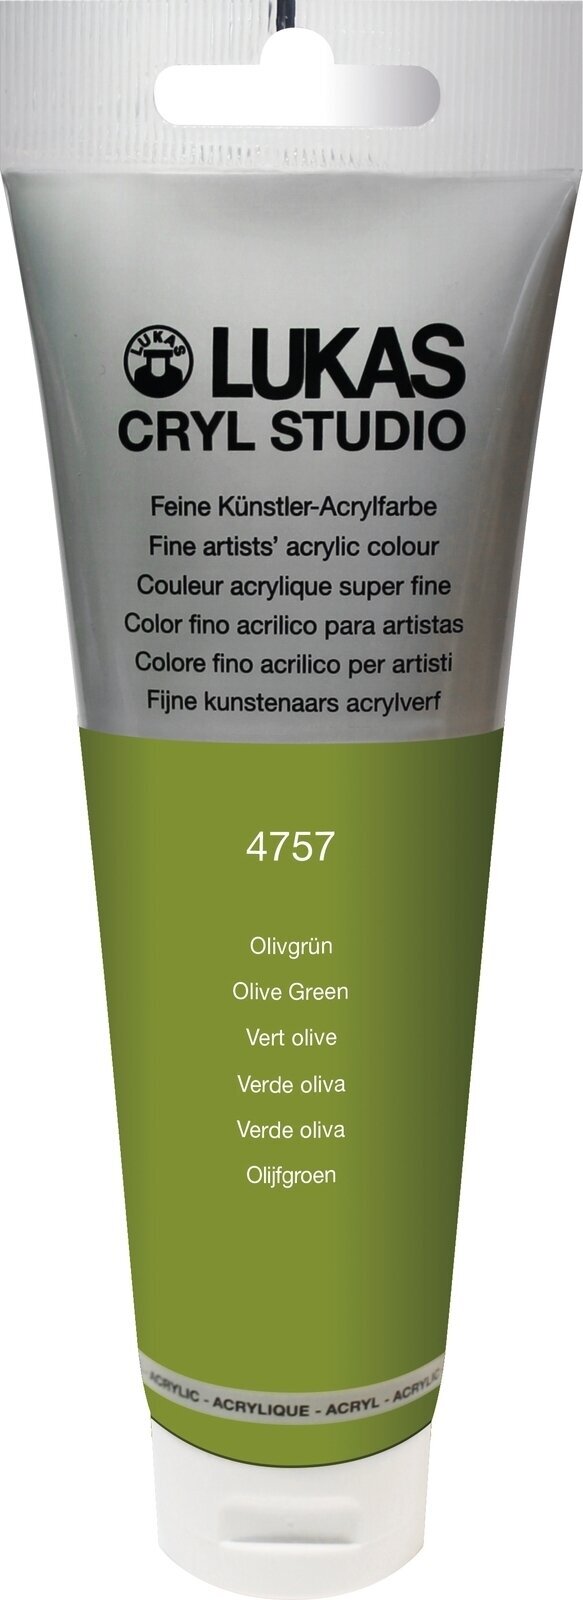 Peinture acrylique Lukas Cryl Studio Acrylic Paint Plastic Tube Peinture acrylique Olive Green 125 ml 1 pc